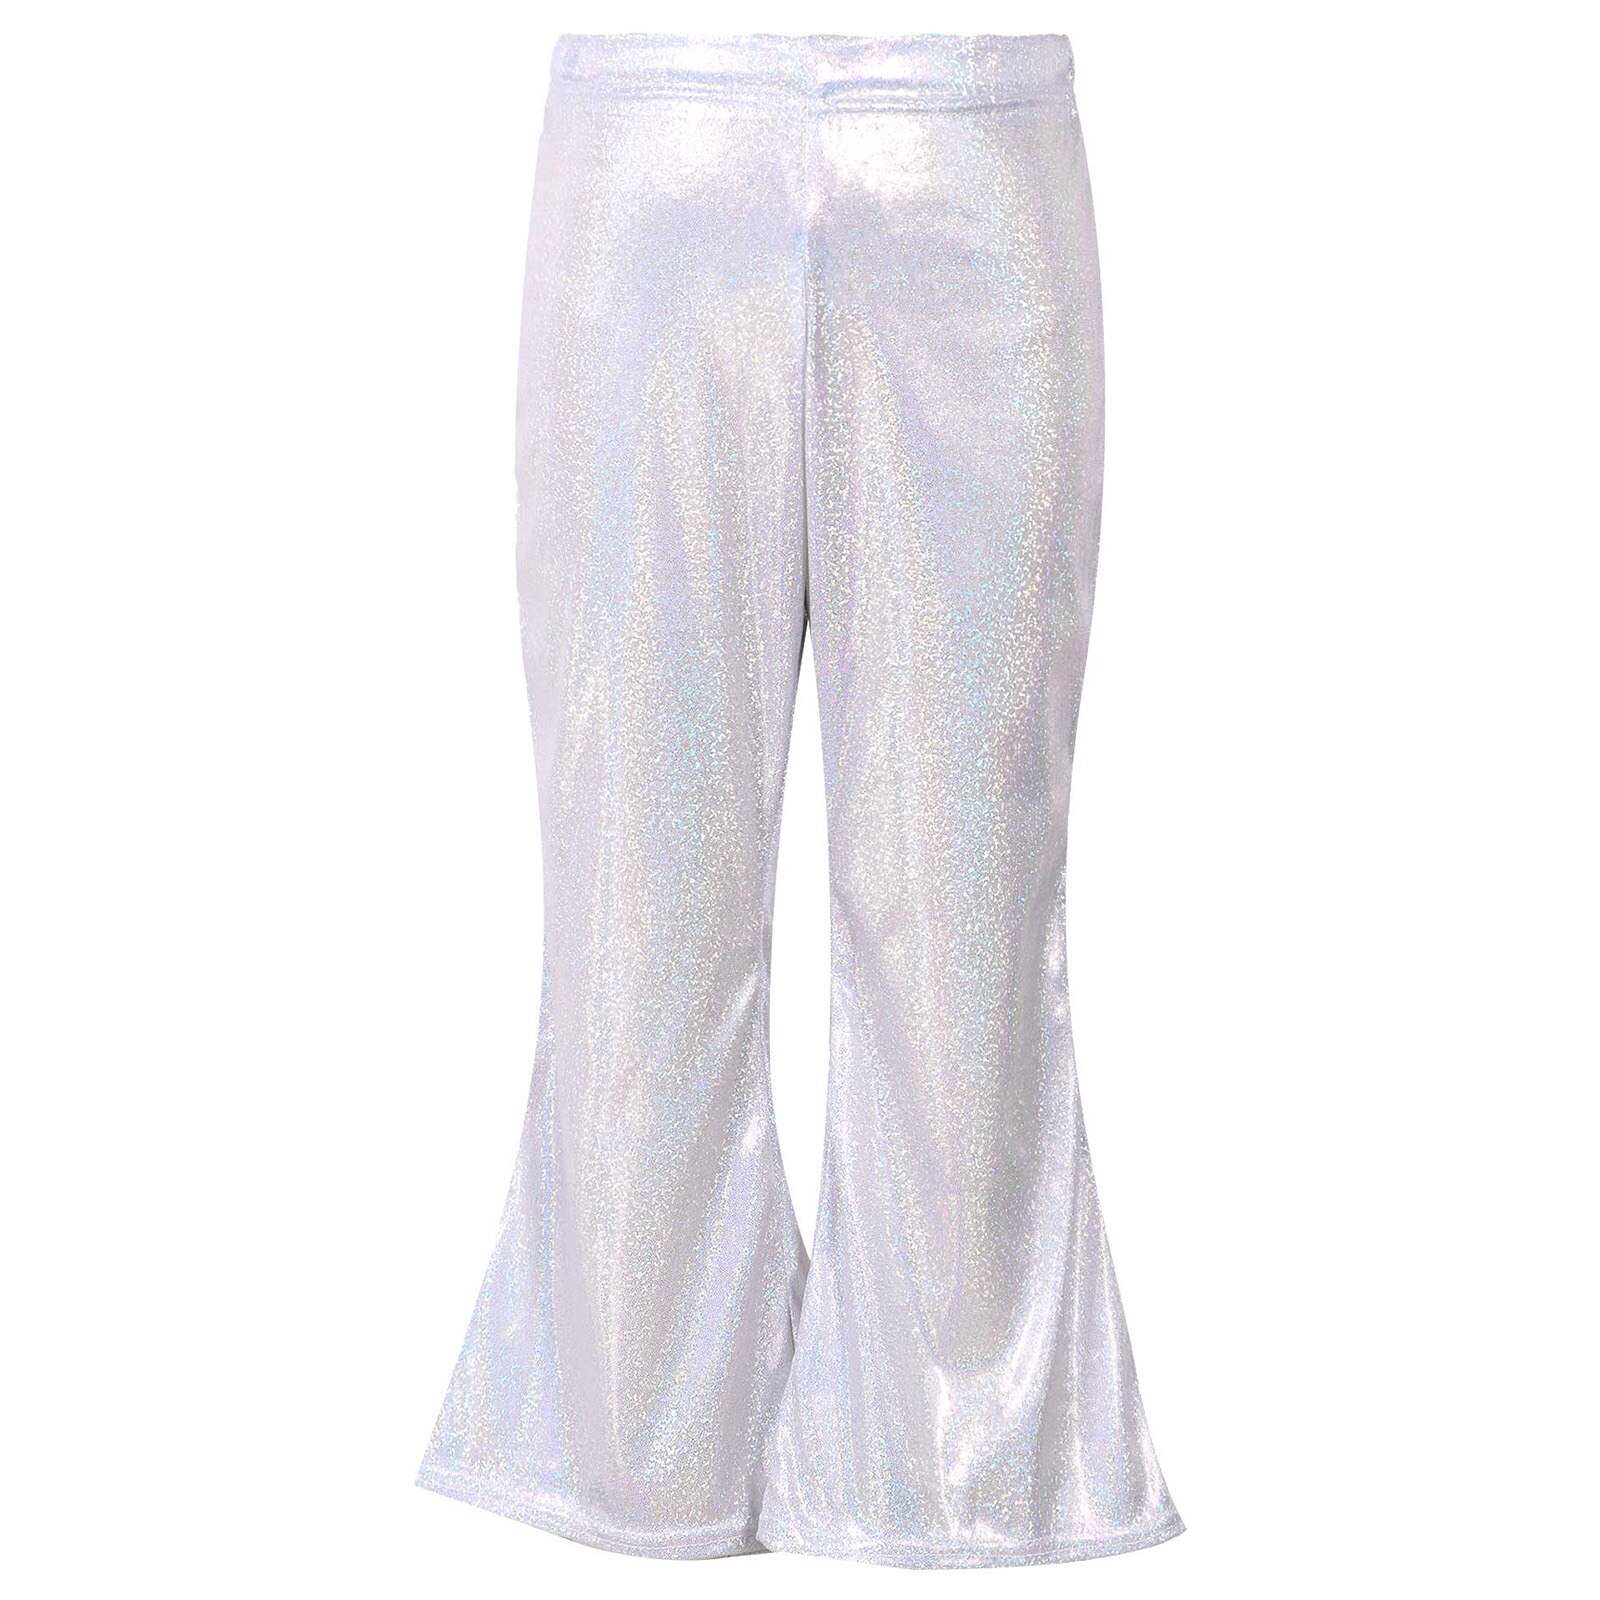 MSemis Kids Girls Flare Bell Bottom Metallic Dance Pants High Waist Glossy  Jazz Leggings Trousers Hot Pink 14 